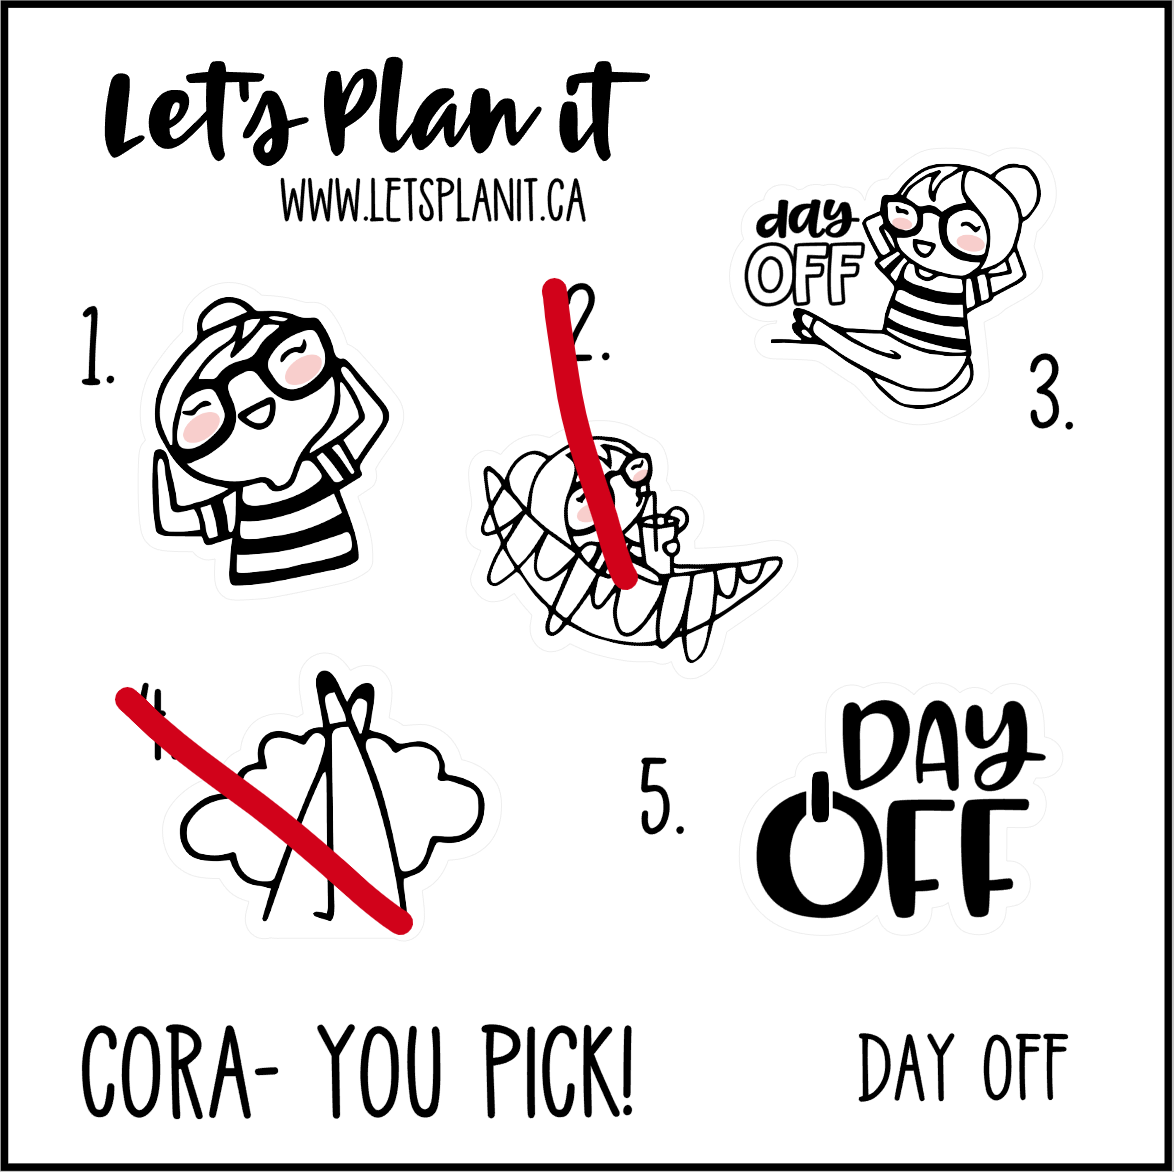 Cora-u-pick- Day Off